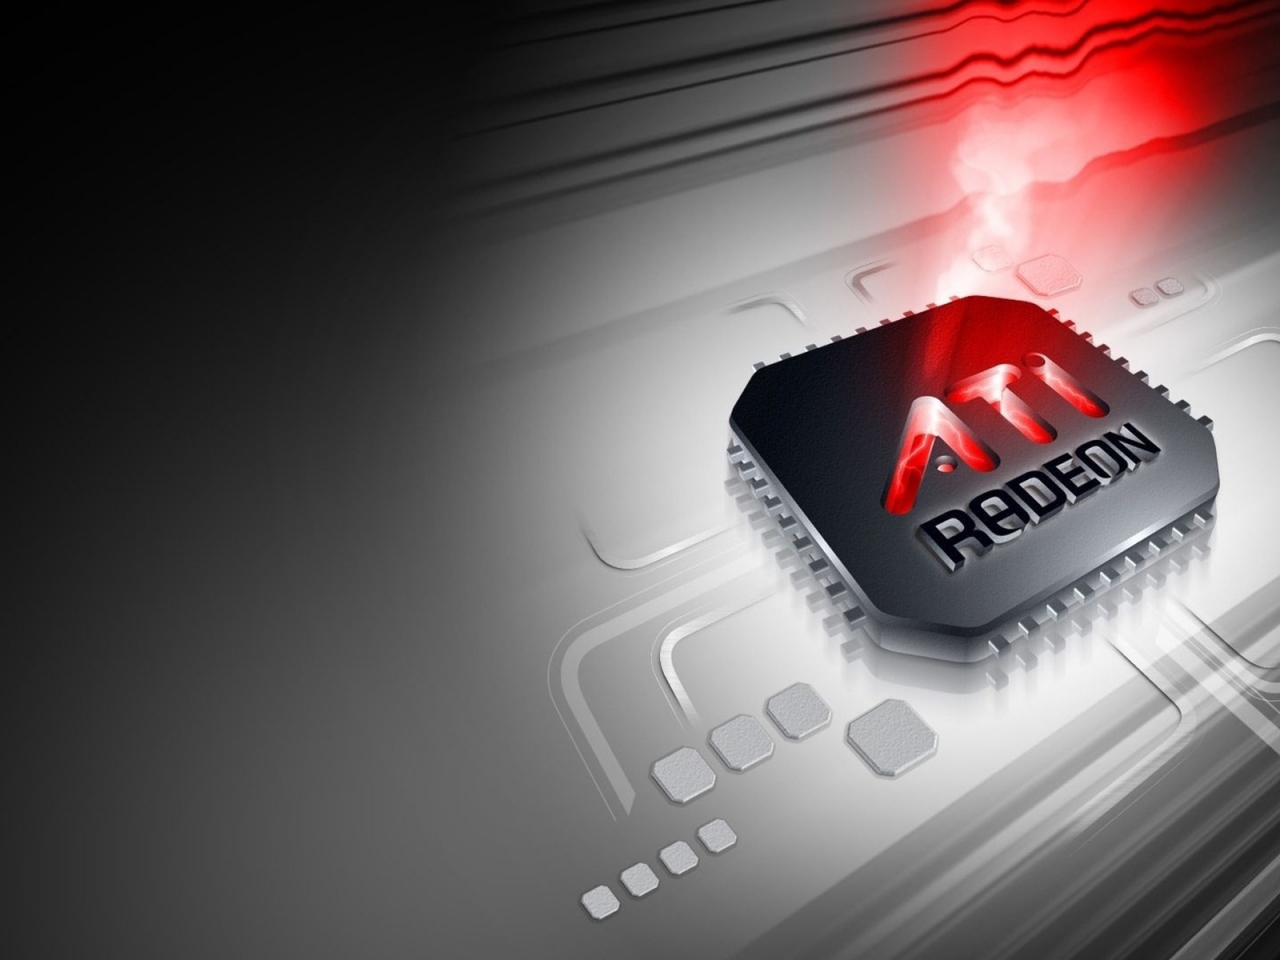 ATI Radeon for 1280 x 960 resolution